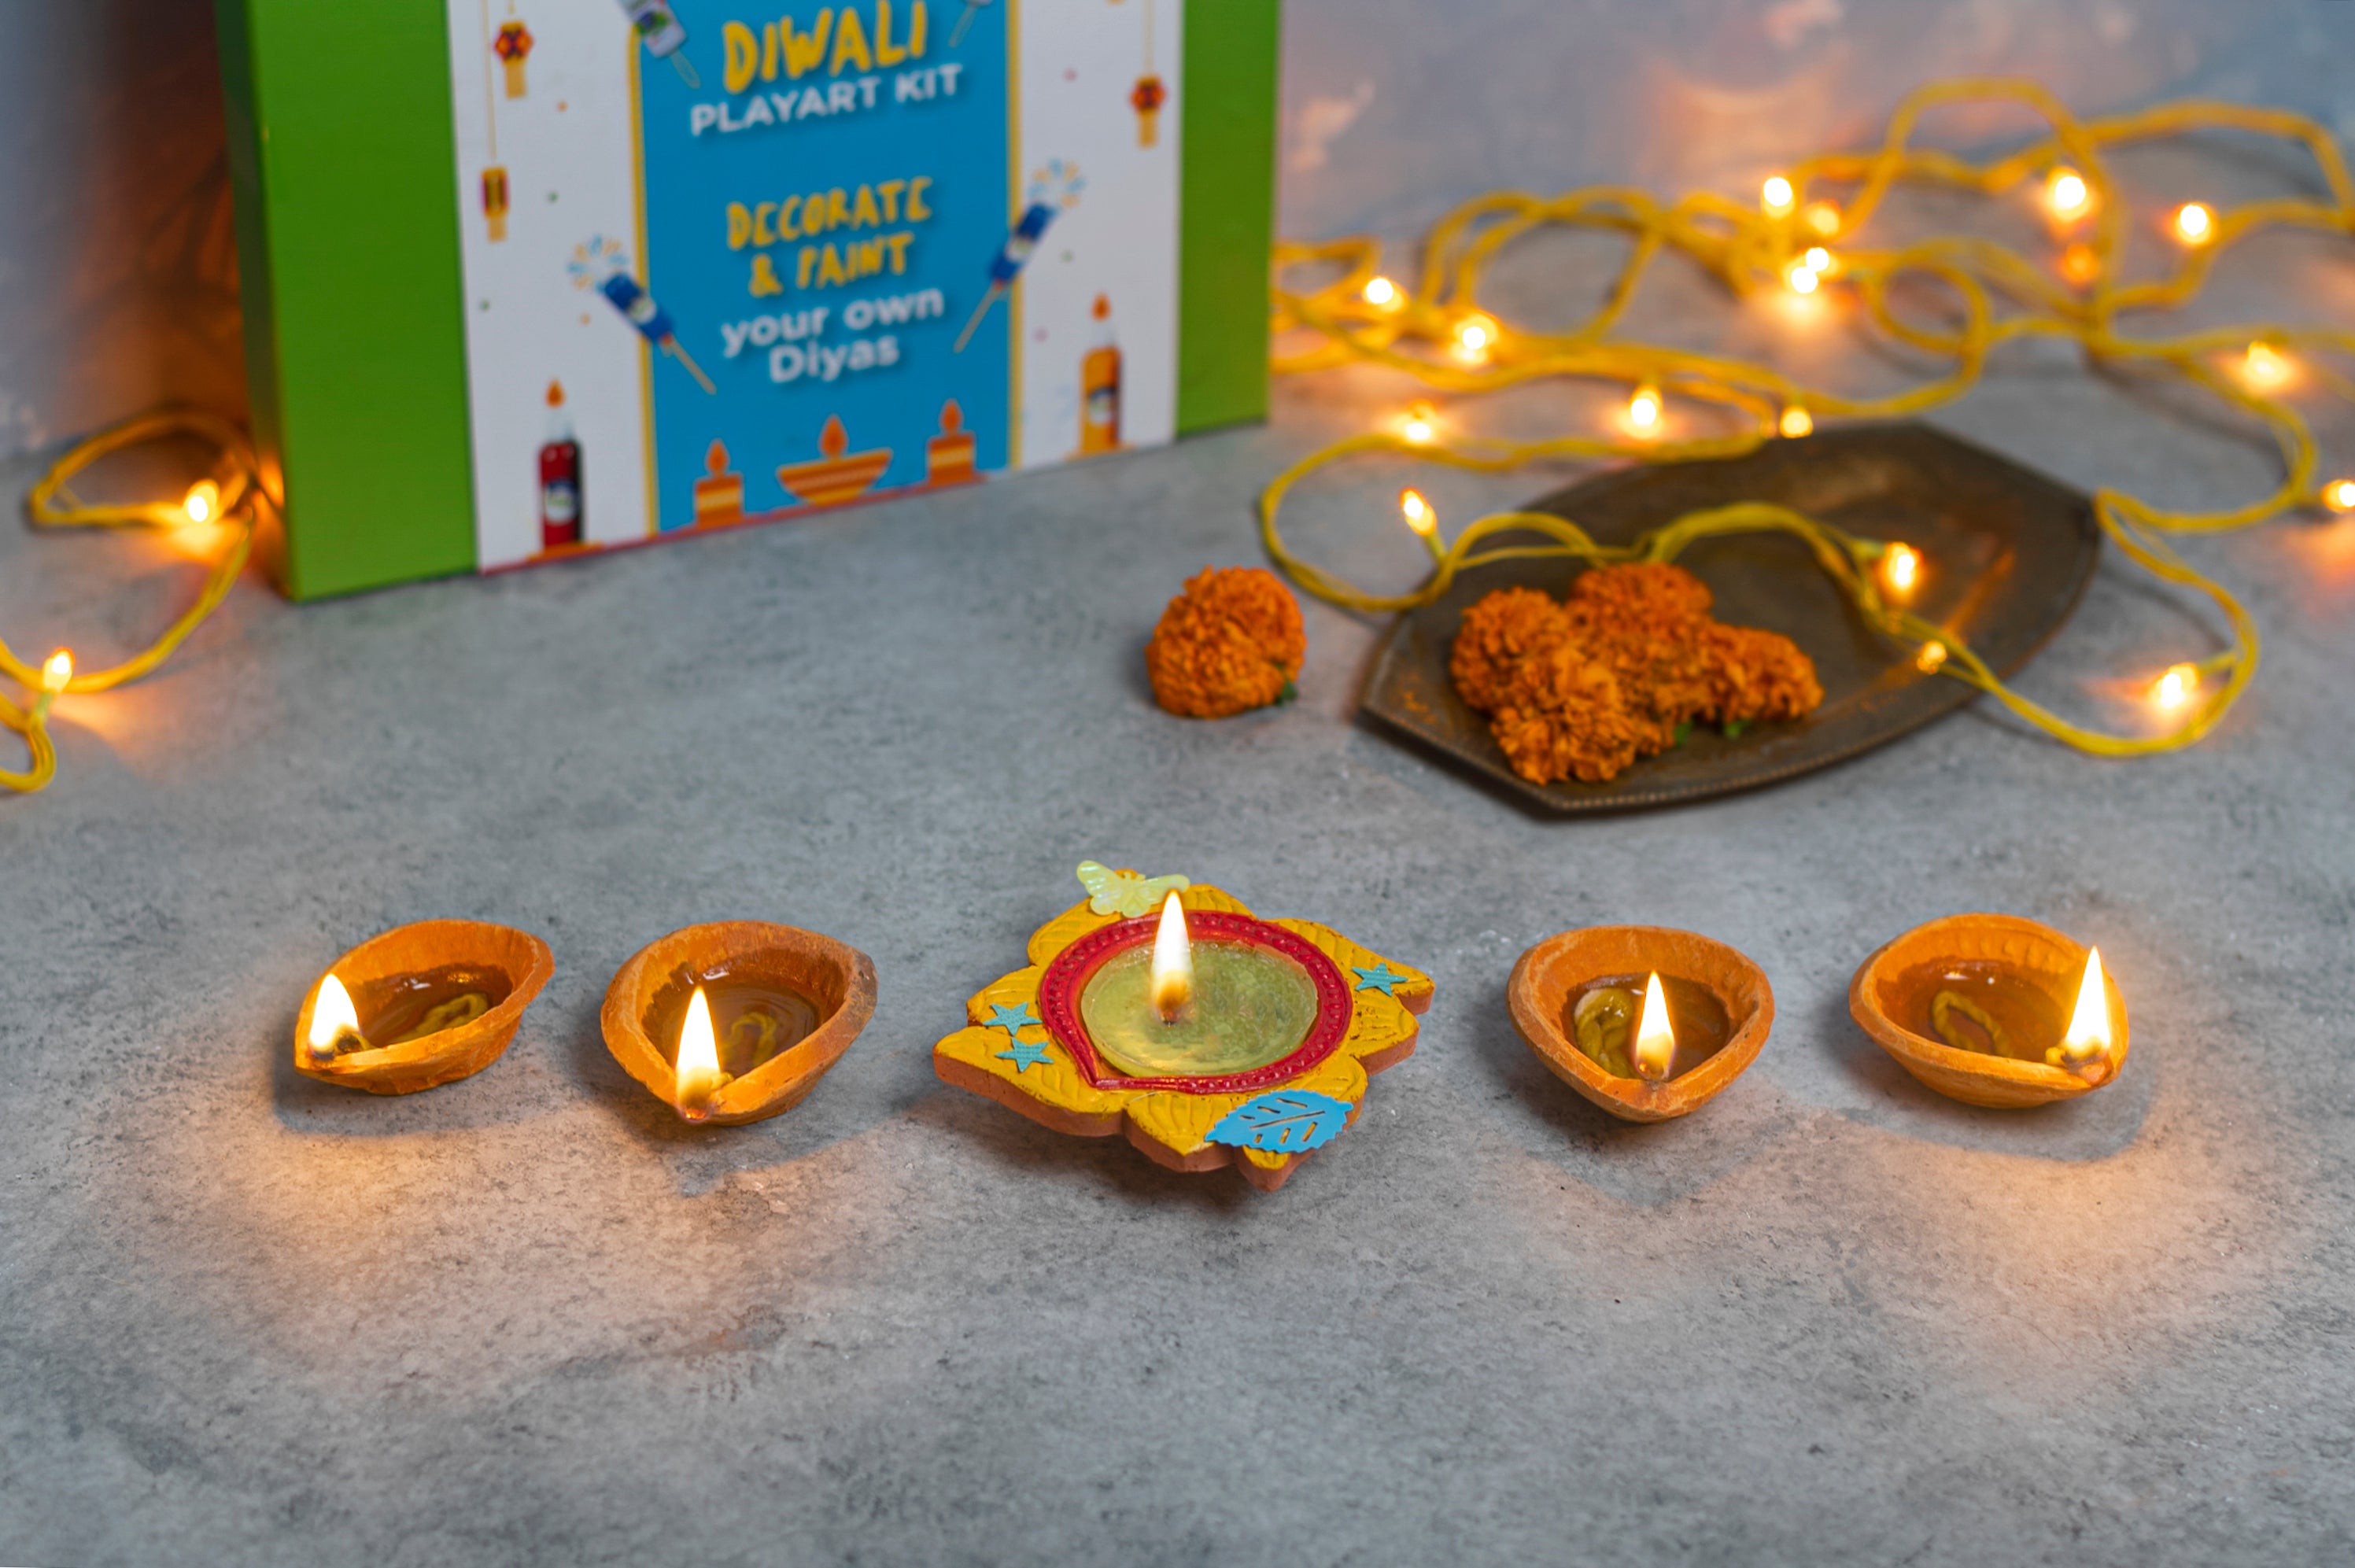 Diwali Playart kit